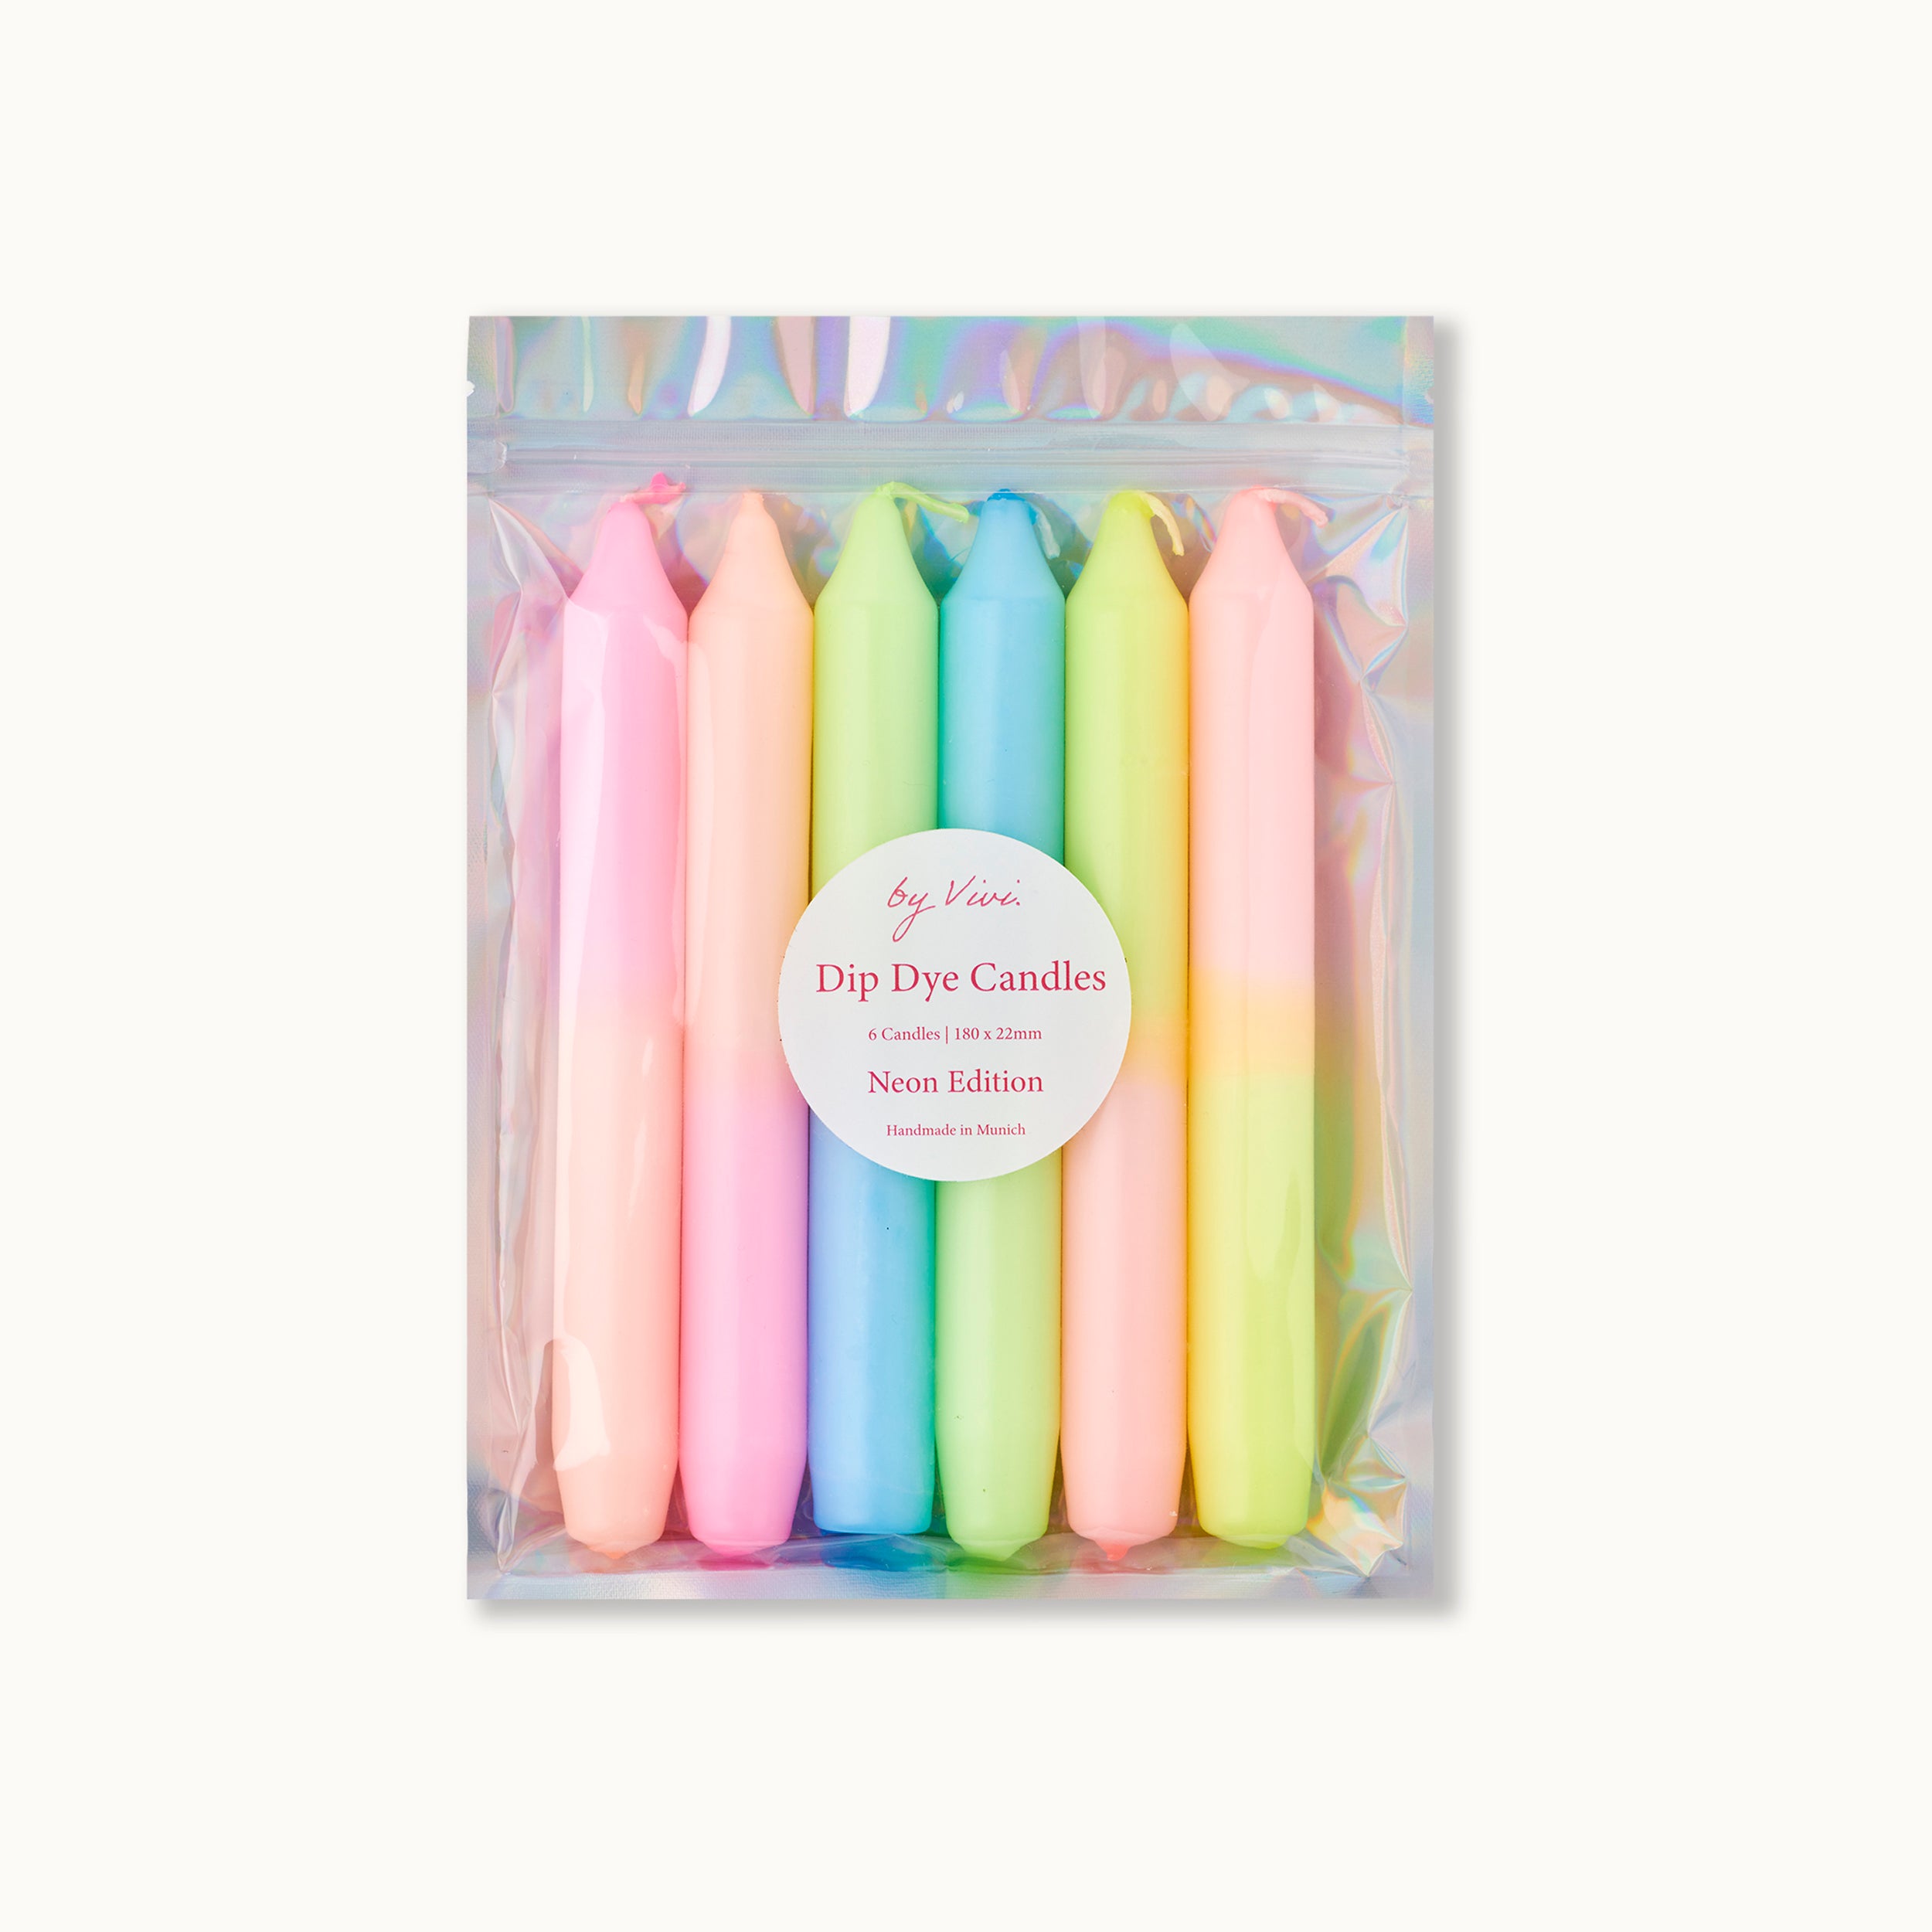 Dip Dye Candle Set: Neon Edition